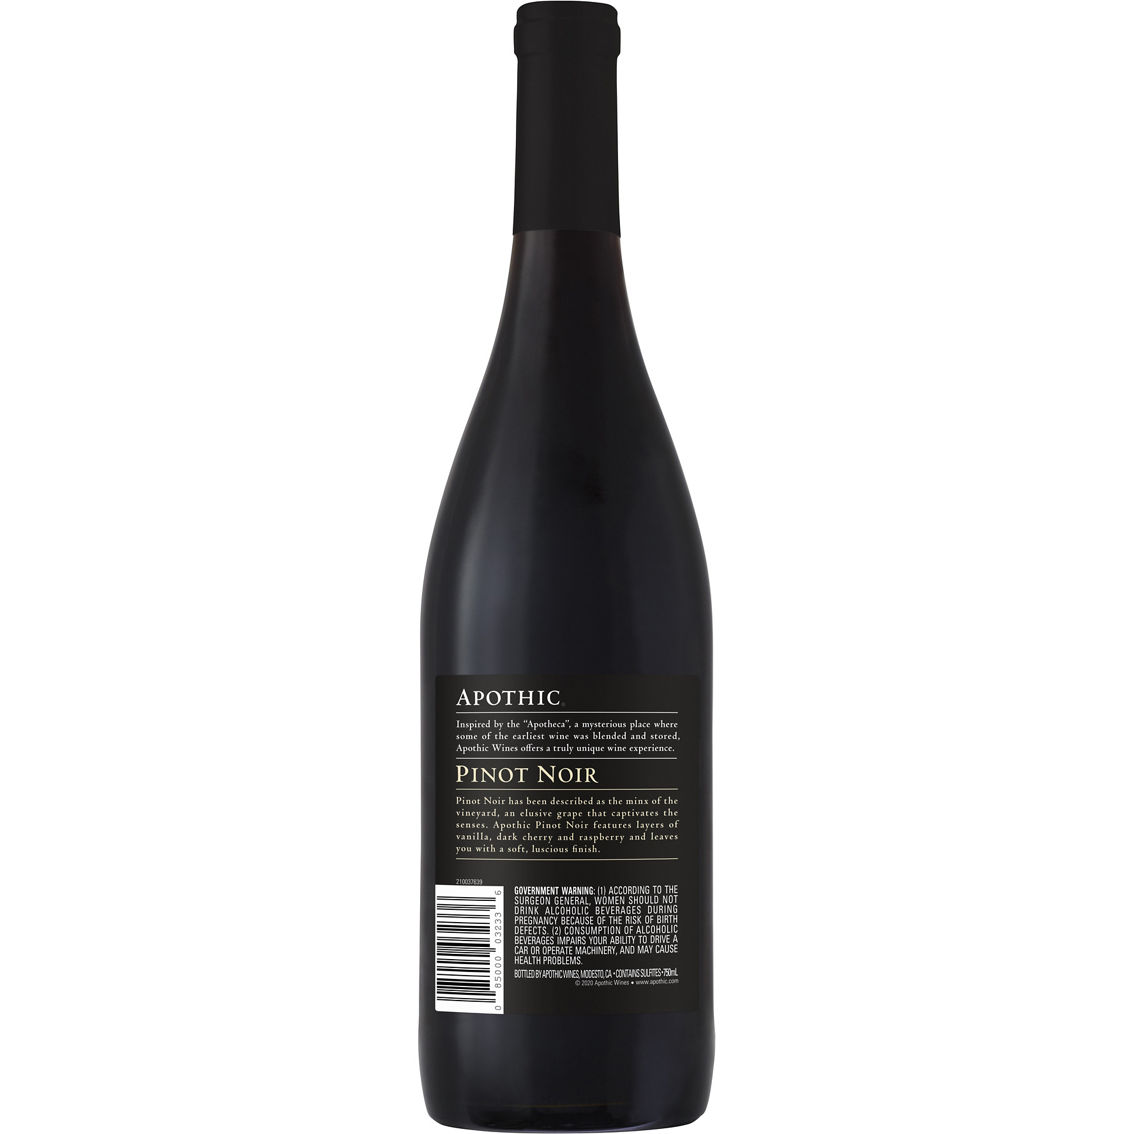 Apothic Pinot Noir 750ml - Image 2 of 2